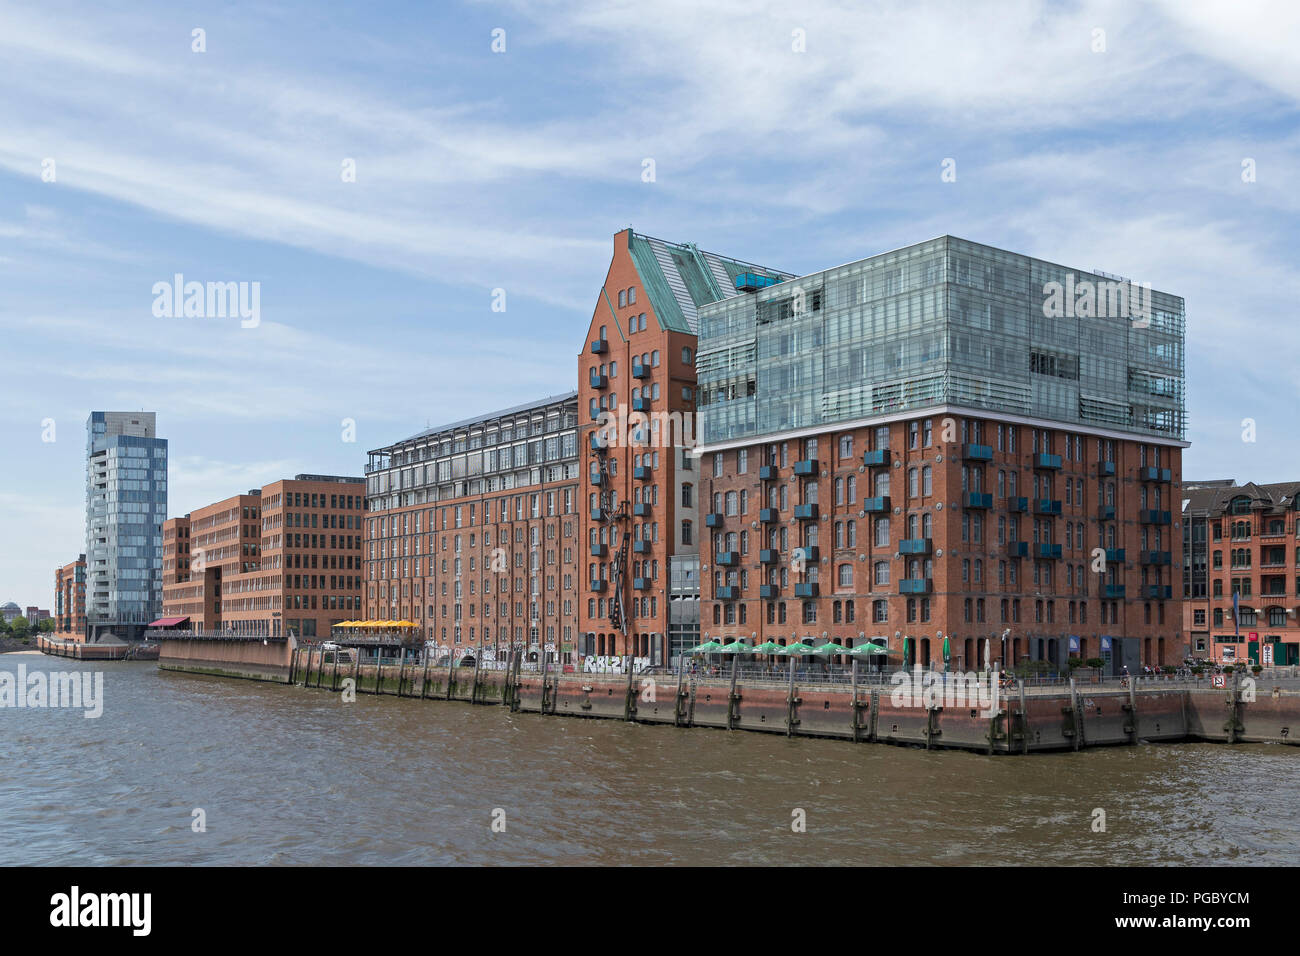 office buildings at the waterfront, River Elbe, Altona, Hamburg, Germany Stock Photo